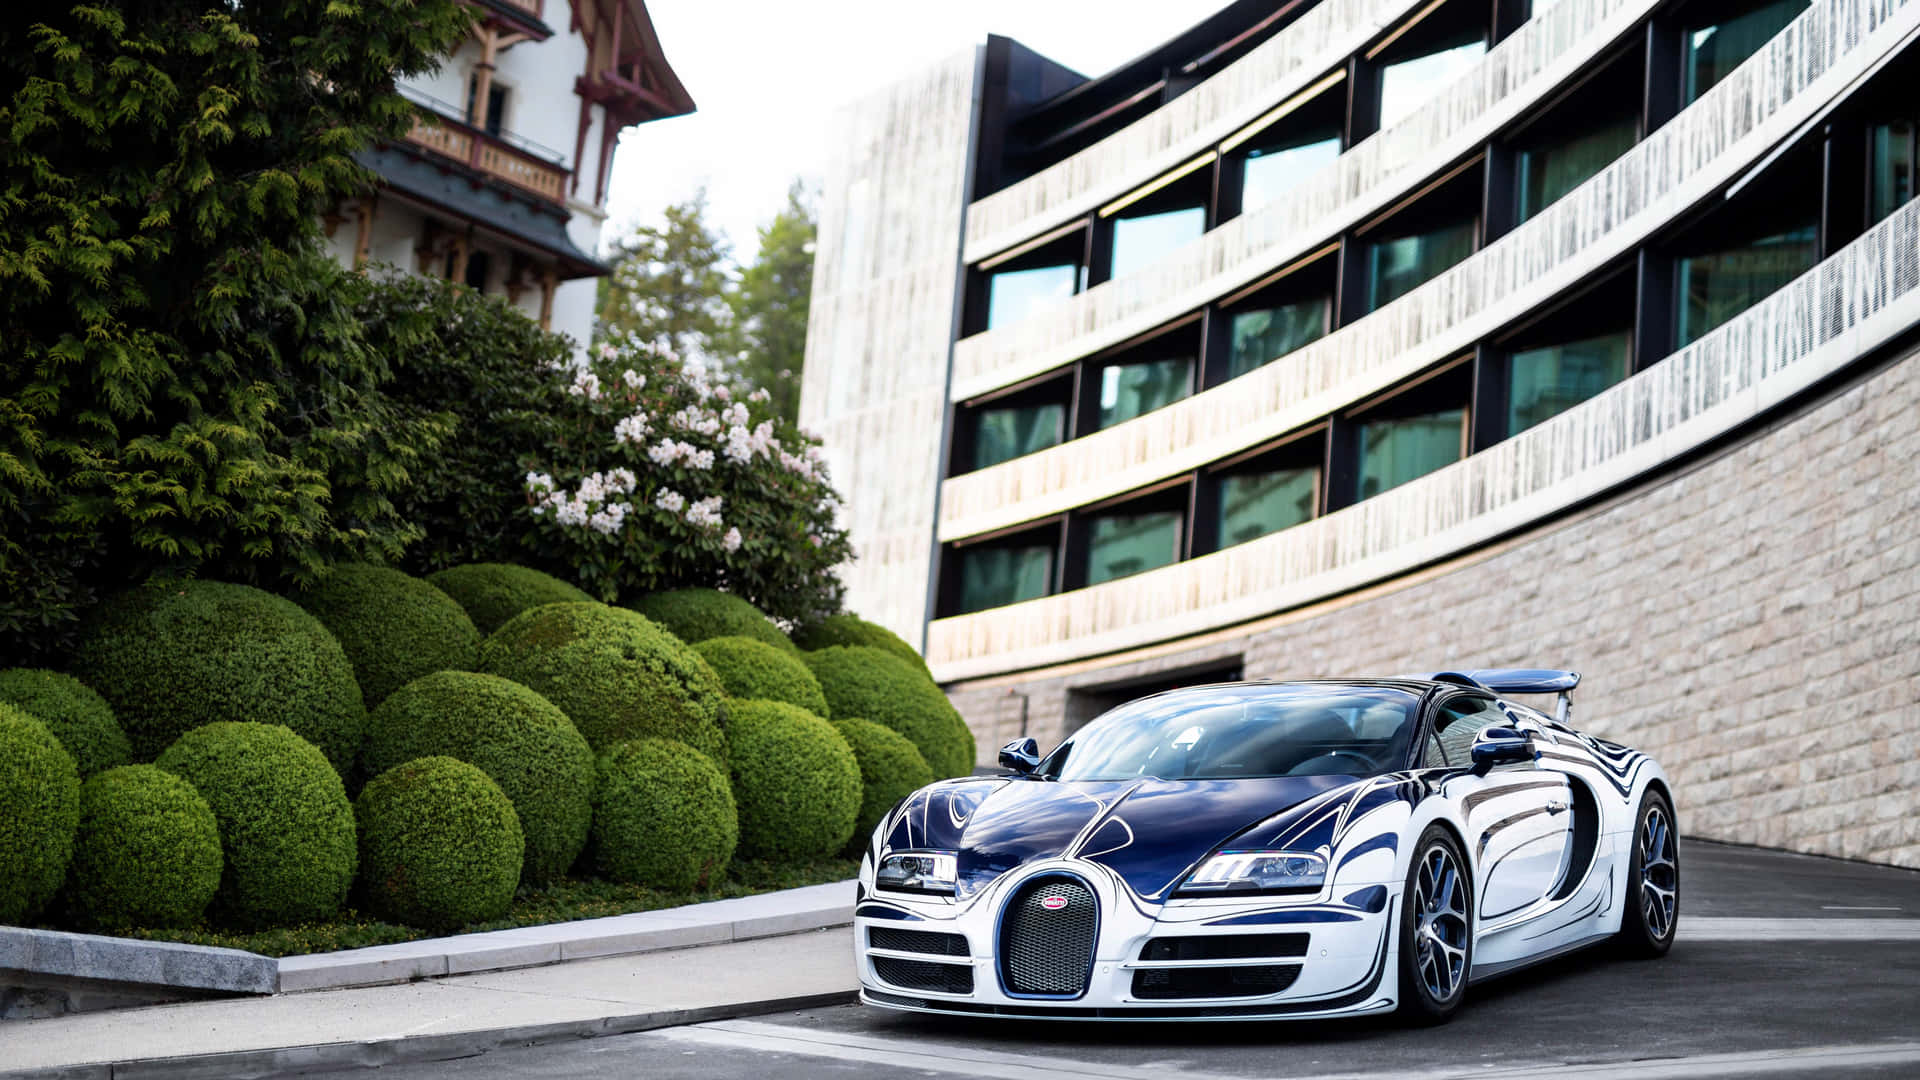 Stunning Bugatti Veyron Super Sport in Action Wallpaper